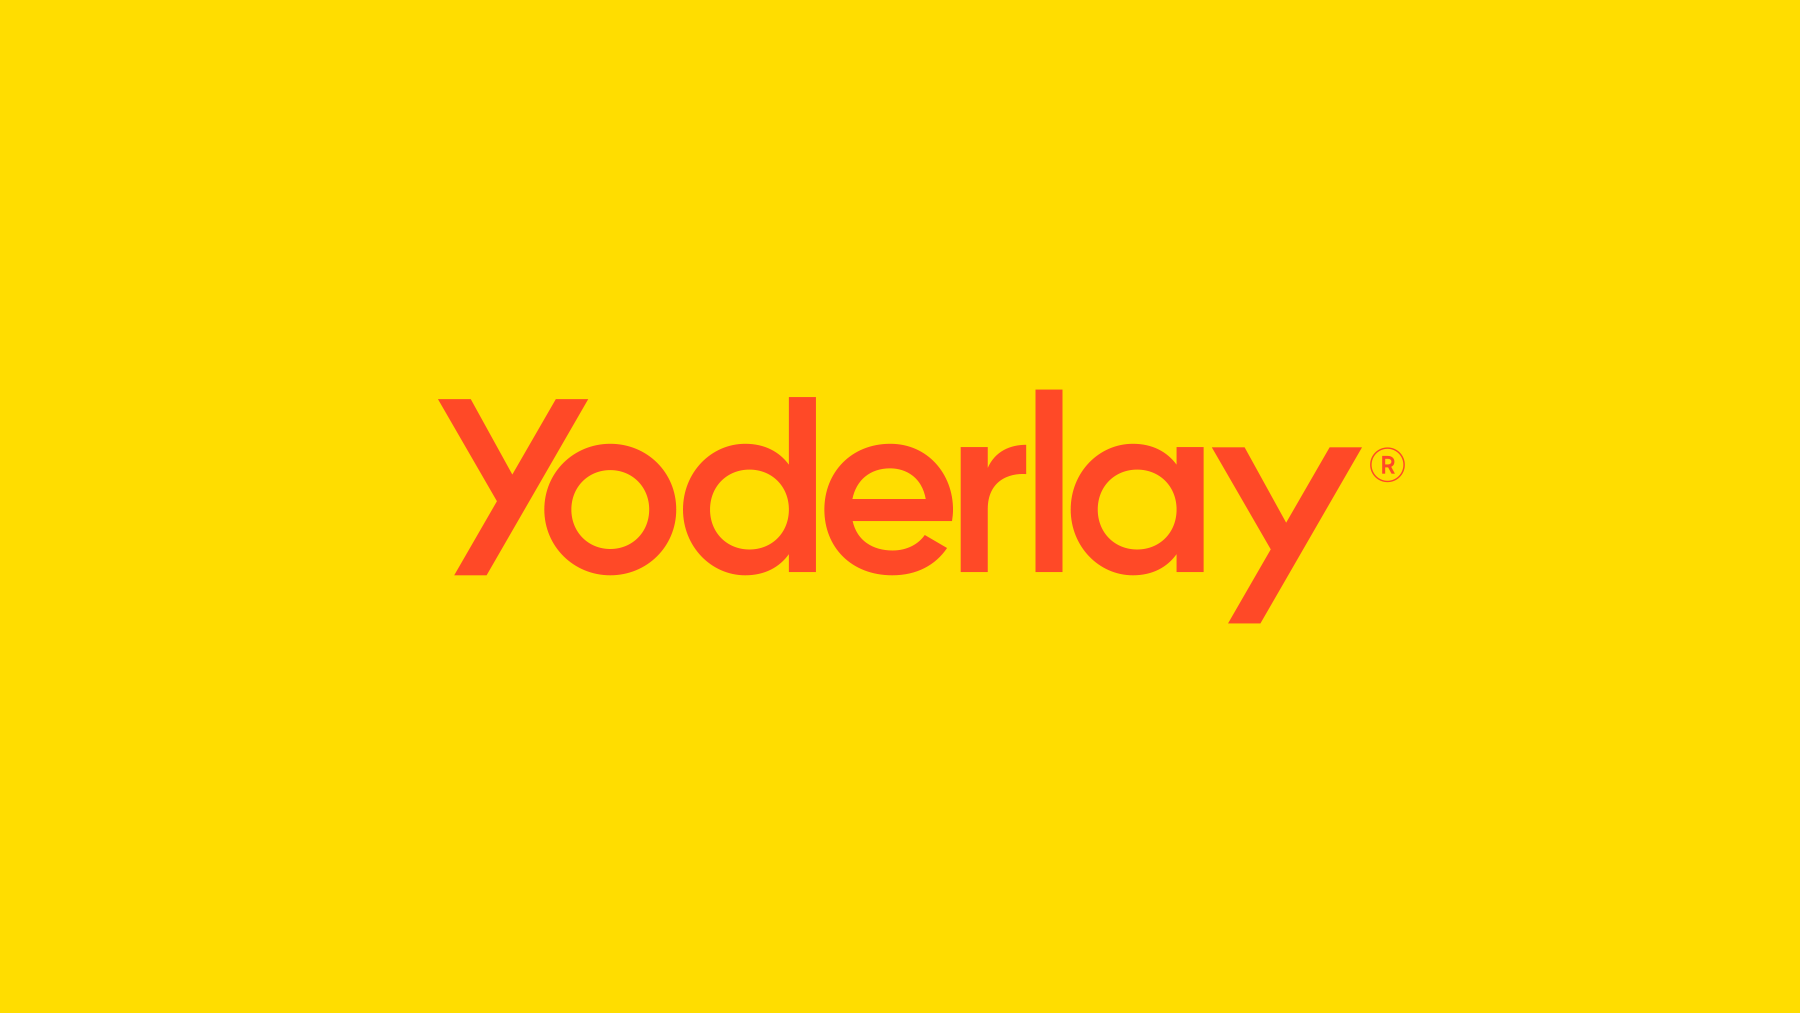 Yoderlay brand design typography in orange.